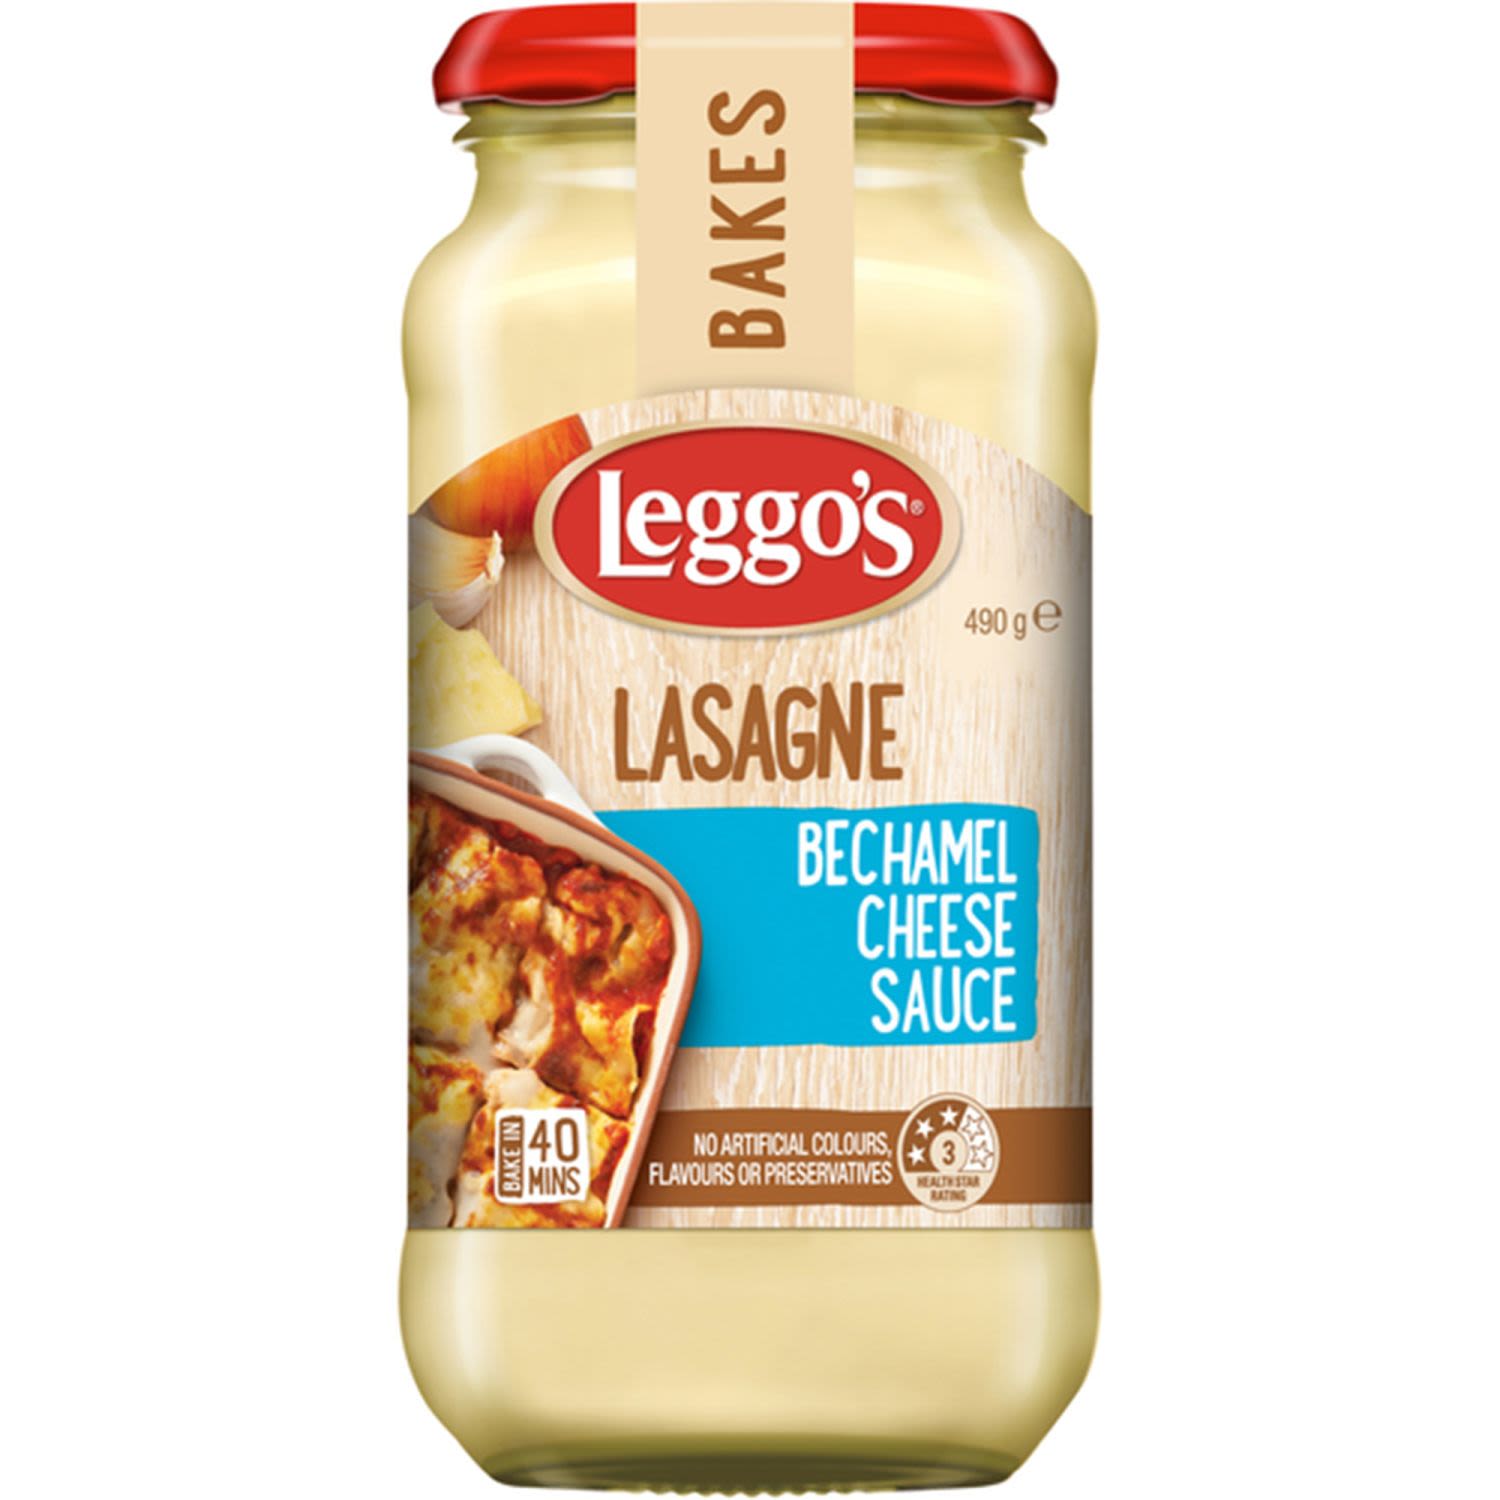 Leggo's Lasagne Bake White Sauce With Tasty Cheese | IGA Shop Online